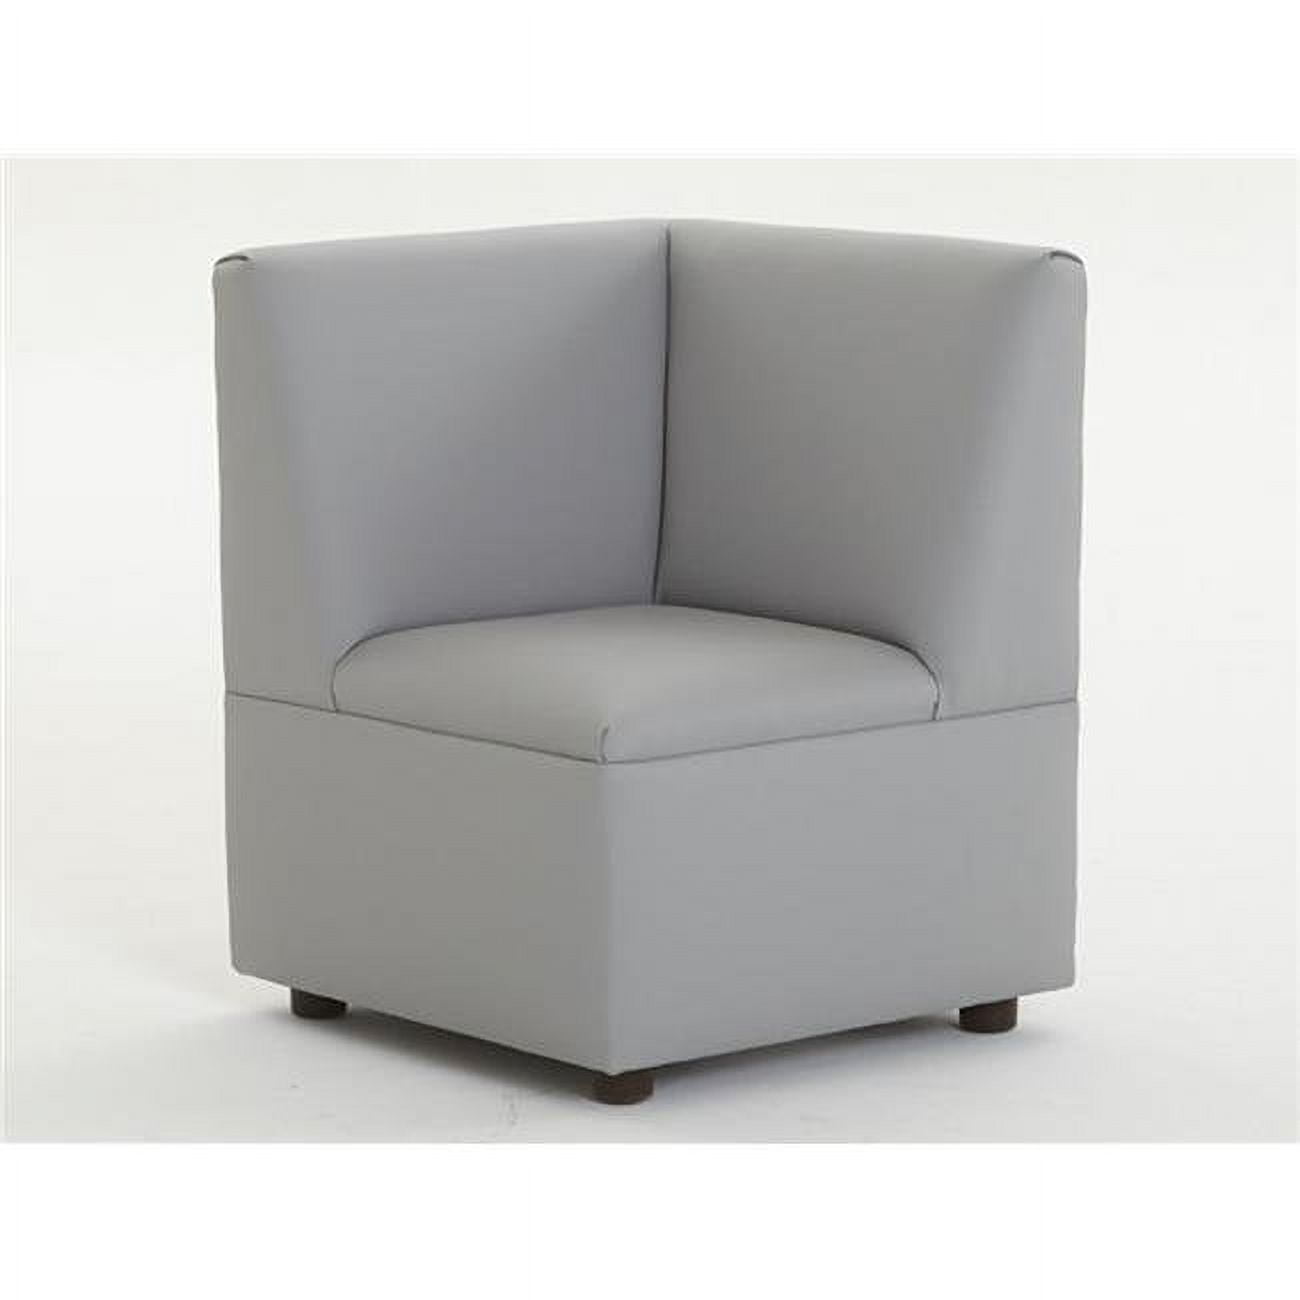 Fm0260-211 Modern Casual Cozy Corner Chair, Gray 26 X 20 X 20 In.